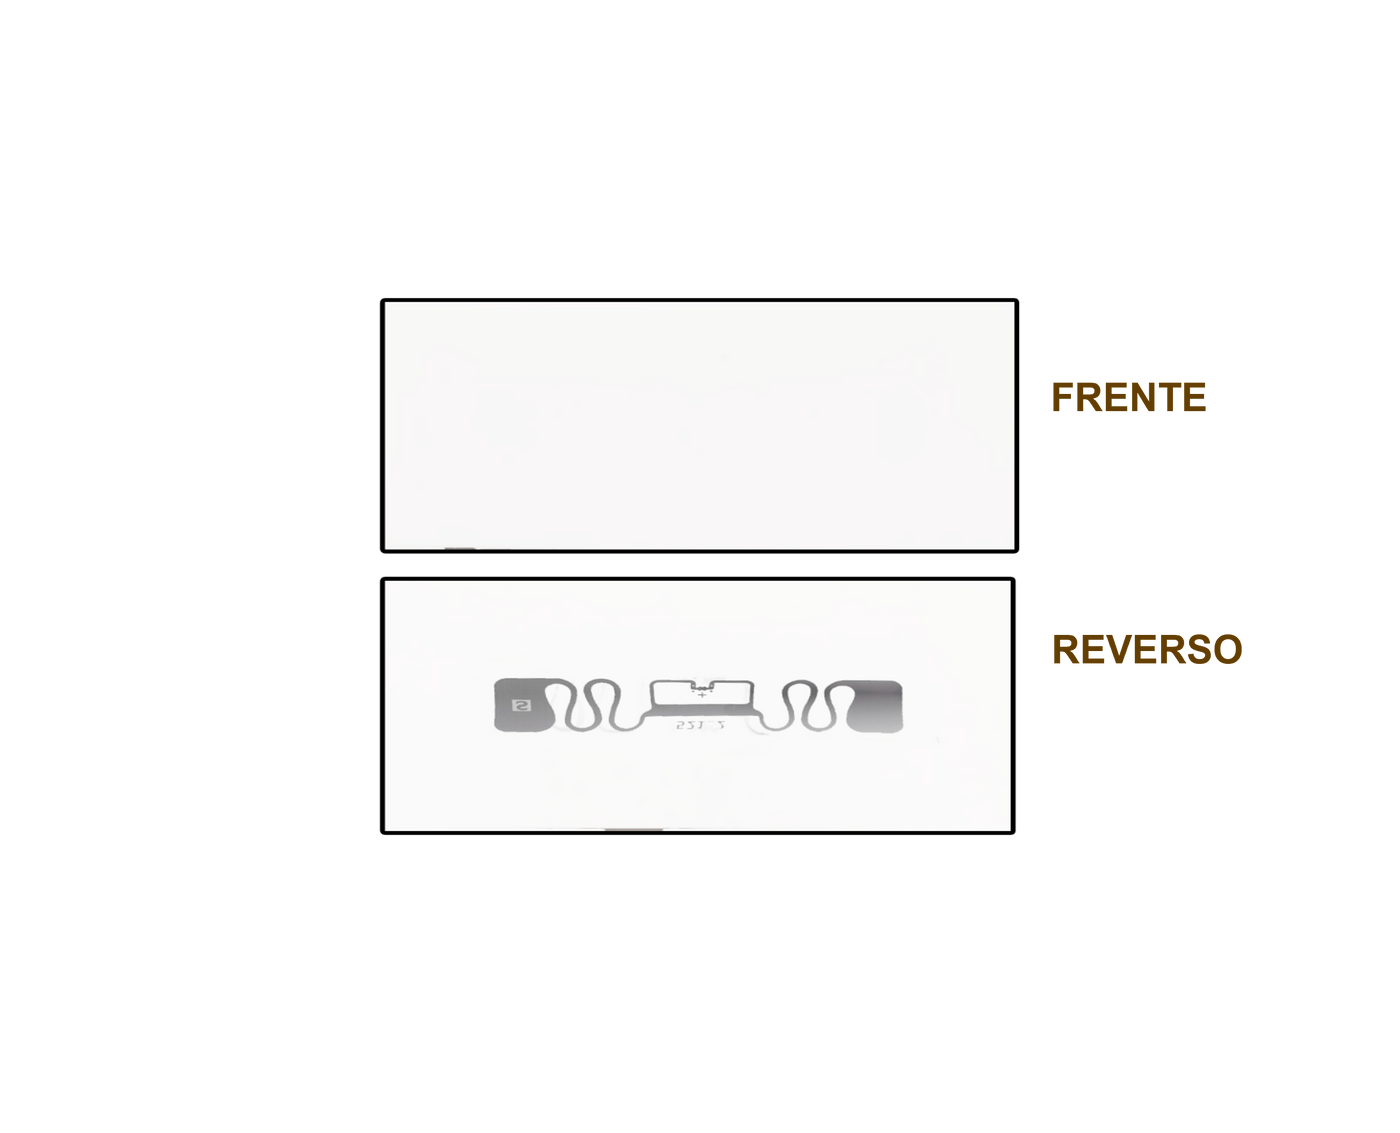 20 Millares de Etiqueta RFID TTR adherible blanca 101mm x 51 mm con inlay EPC Miniweb M730 de Avery Dennison, Class 1, Gen 2, UHF 860-960 MHz, 128 Bit